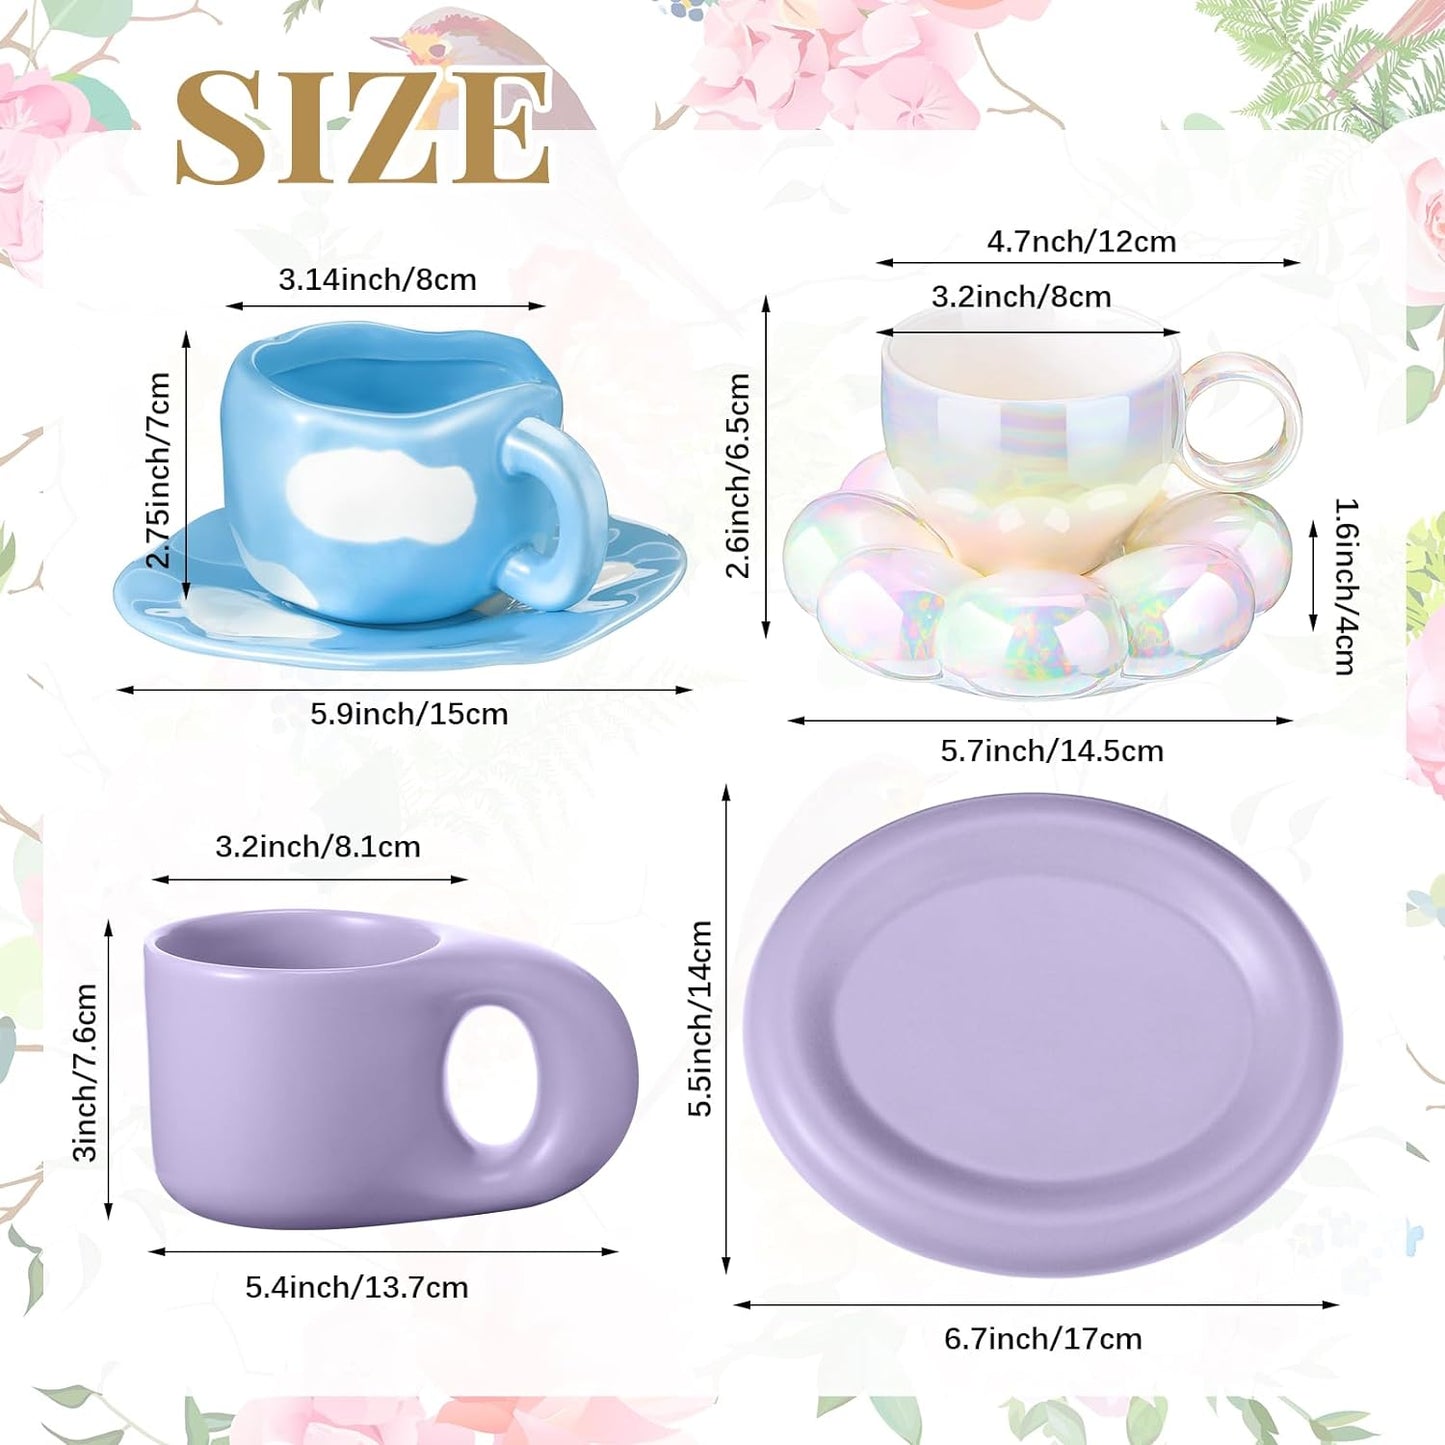 Sumind 3 Pcs Ceramic Coffee Mug with Saucer Set Irregular Creative Cute Mugs Ceramic Cup Chubby Mug for Latte Tea Milk Office Home, Dishwasher and Microwave Safe (Cloud)